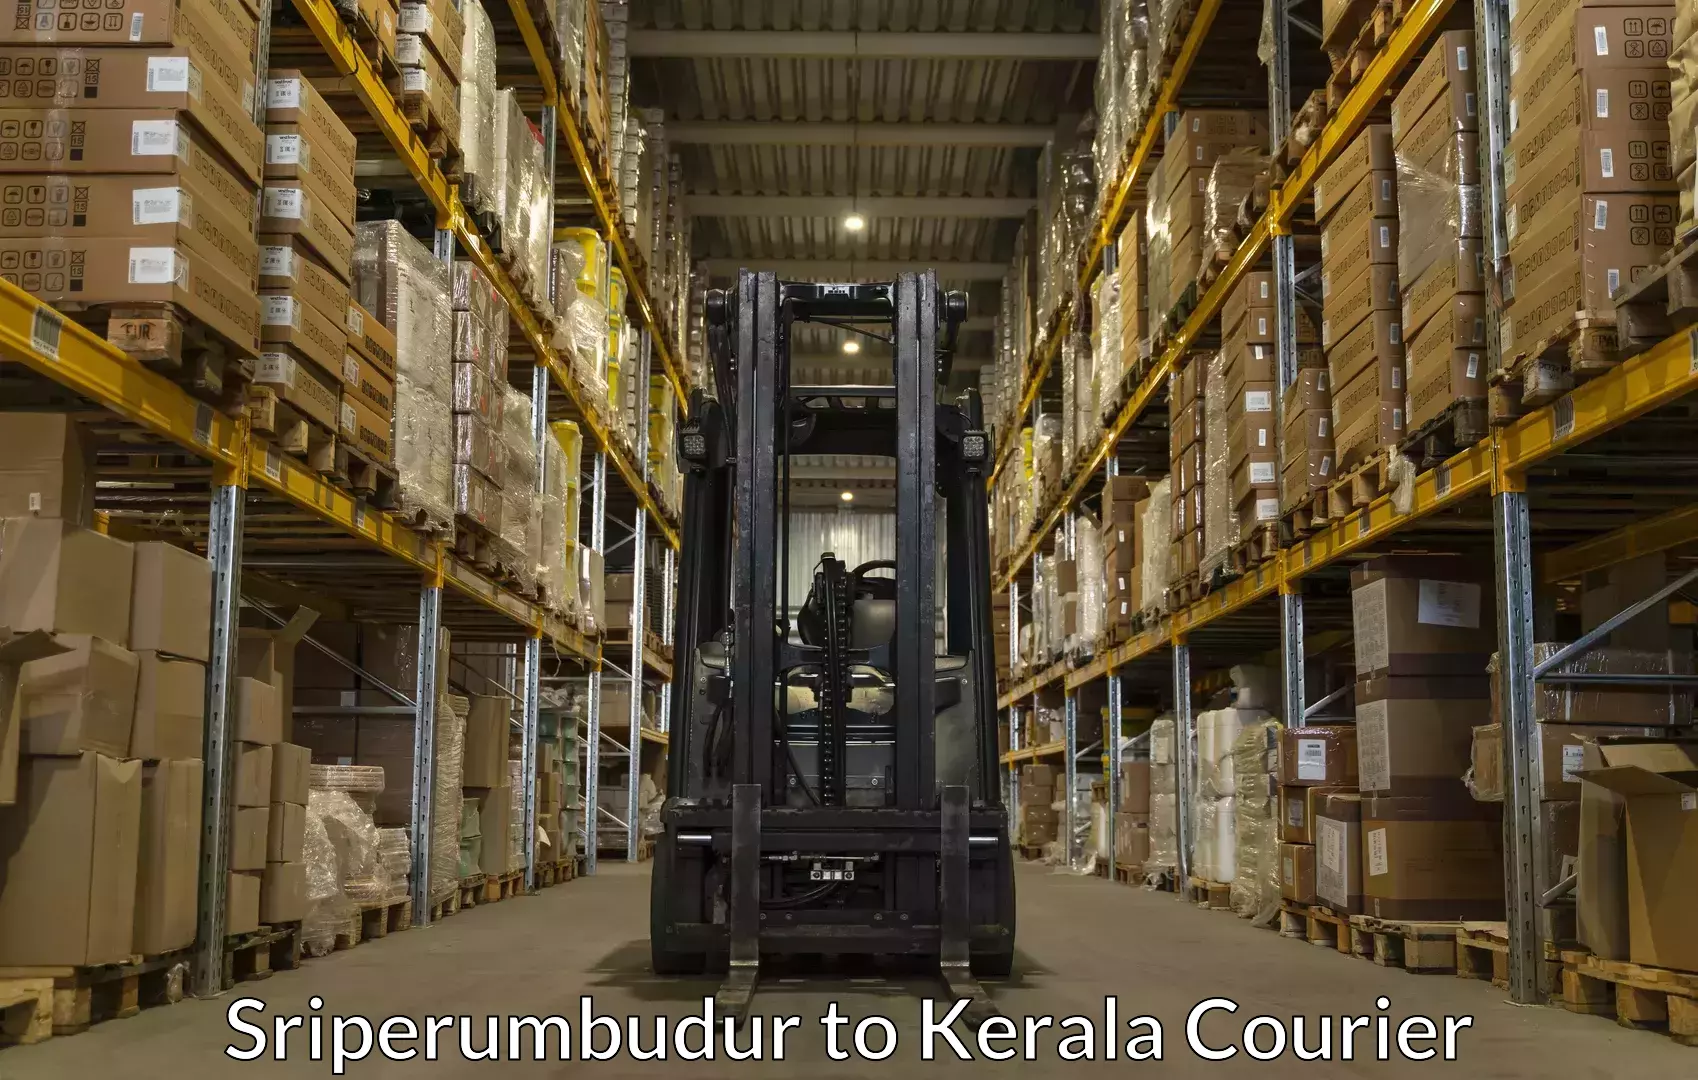 Luggage delivery network Sriperumbudur to Kattappana